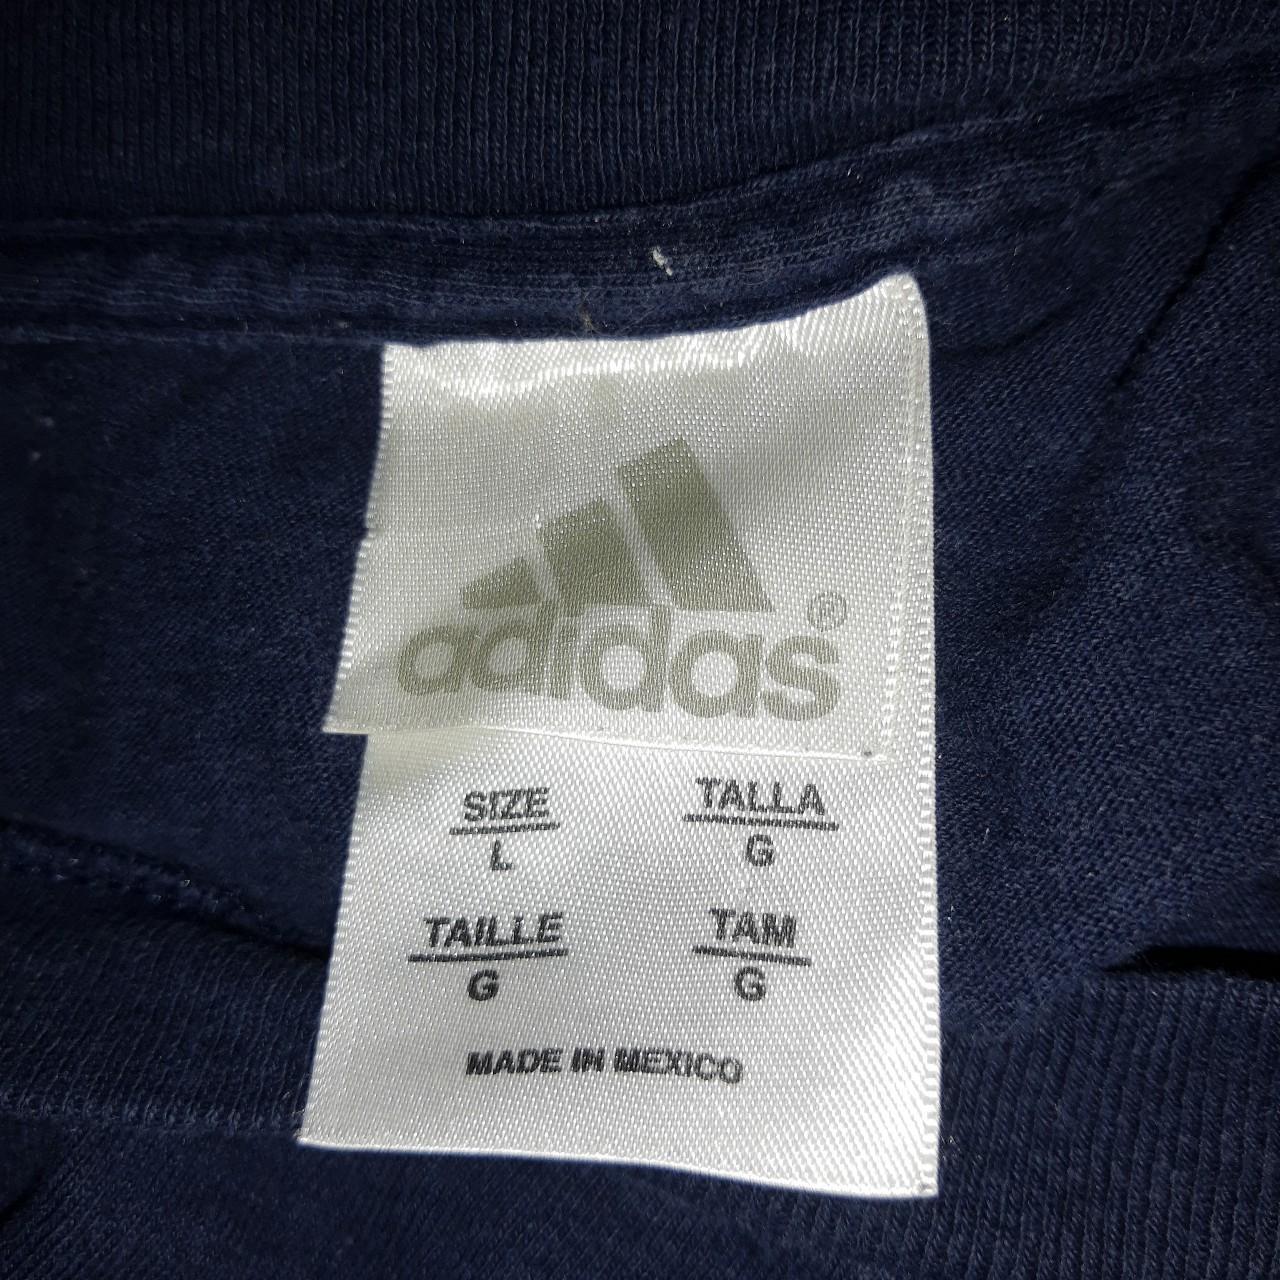 Adidas Originals Men's Blue Shirt | Depop